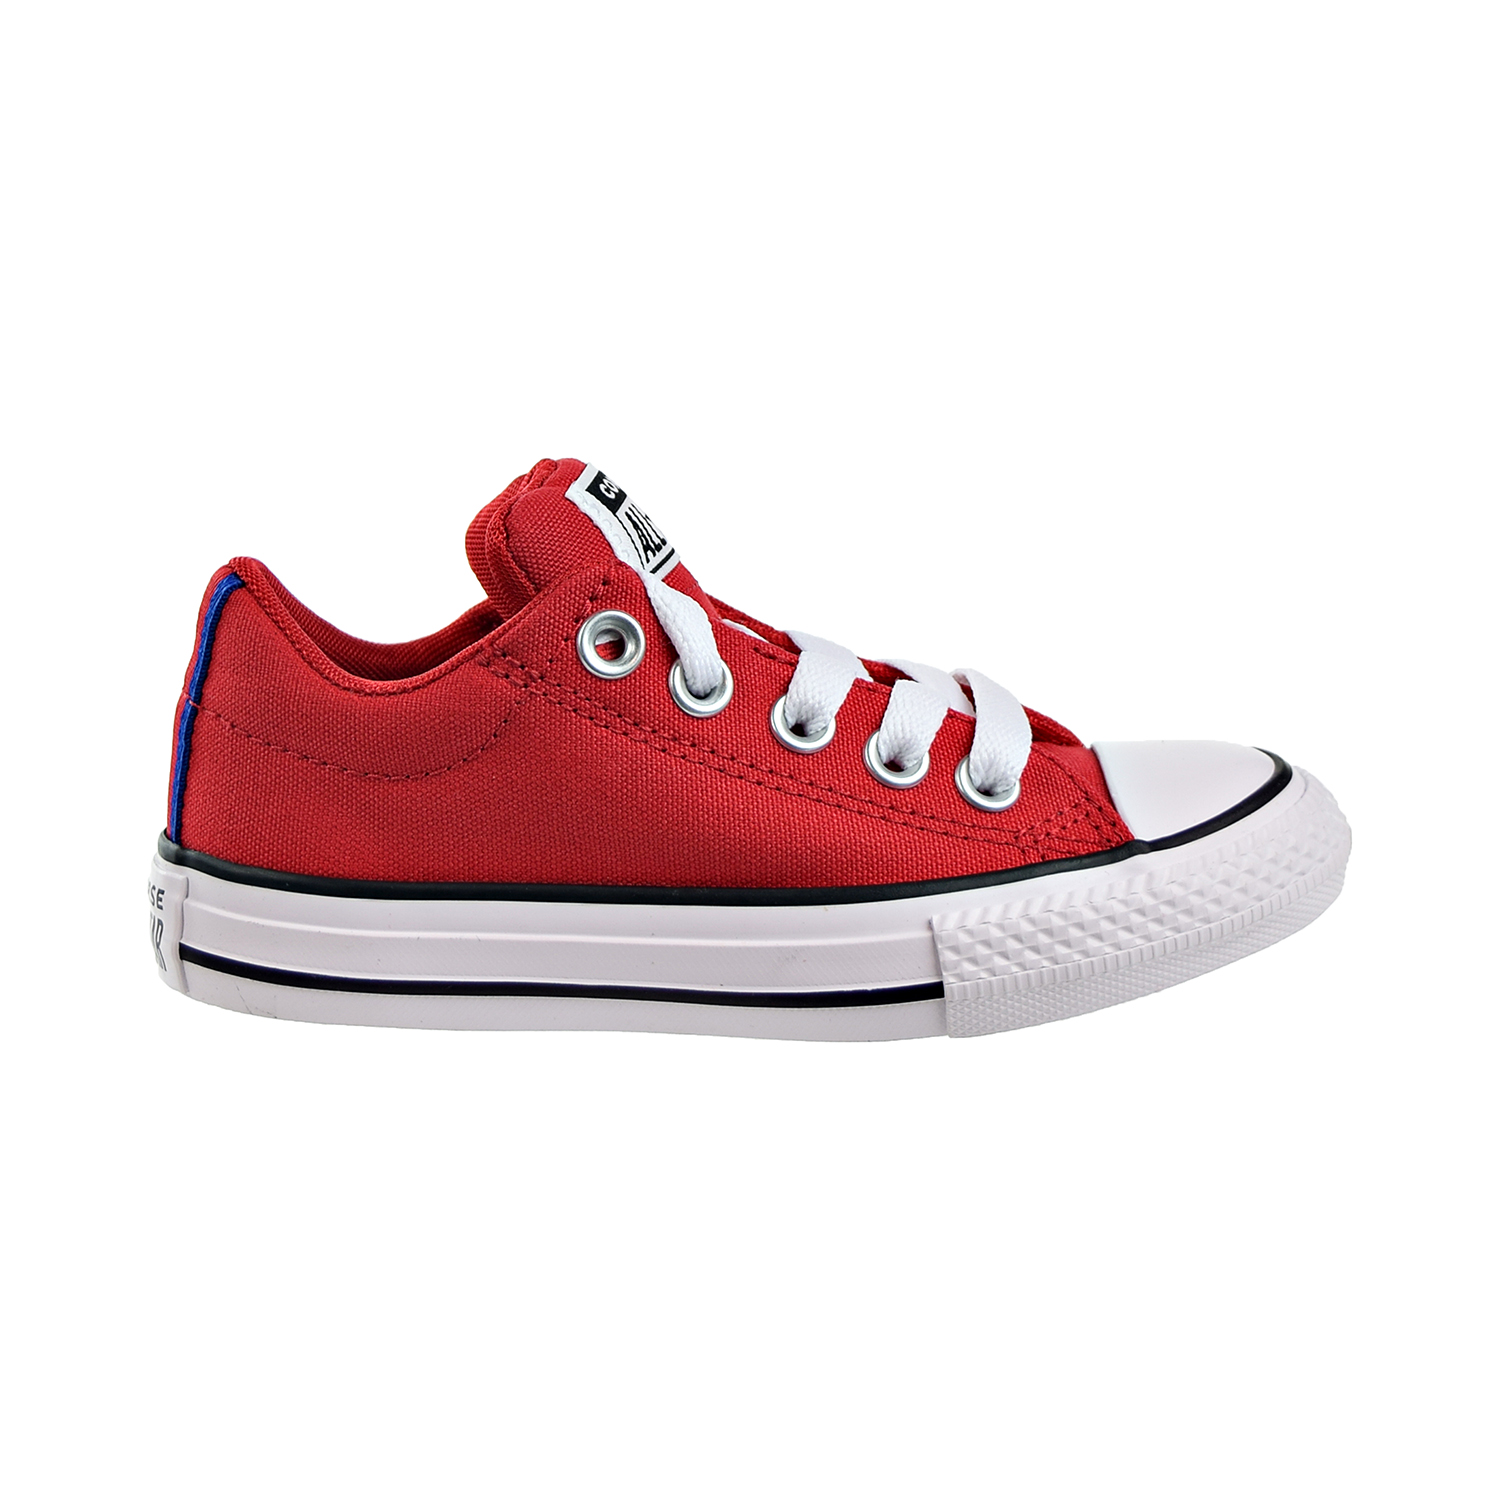 Converse Chuck Taylor All Star Street Slip Kids Shoes Enamel Red/Black/White  663598f